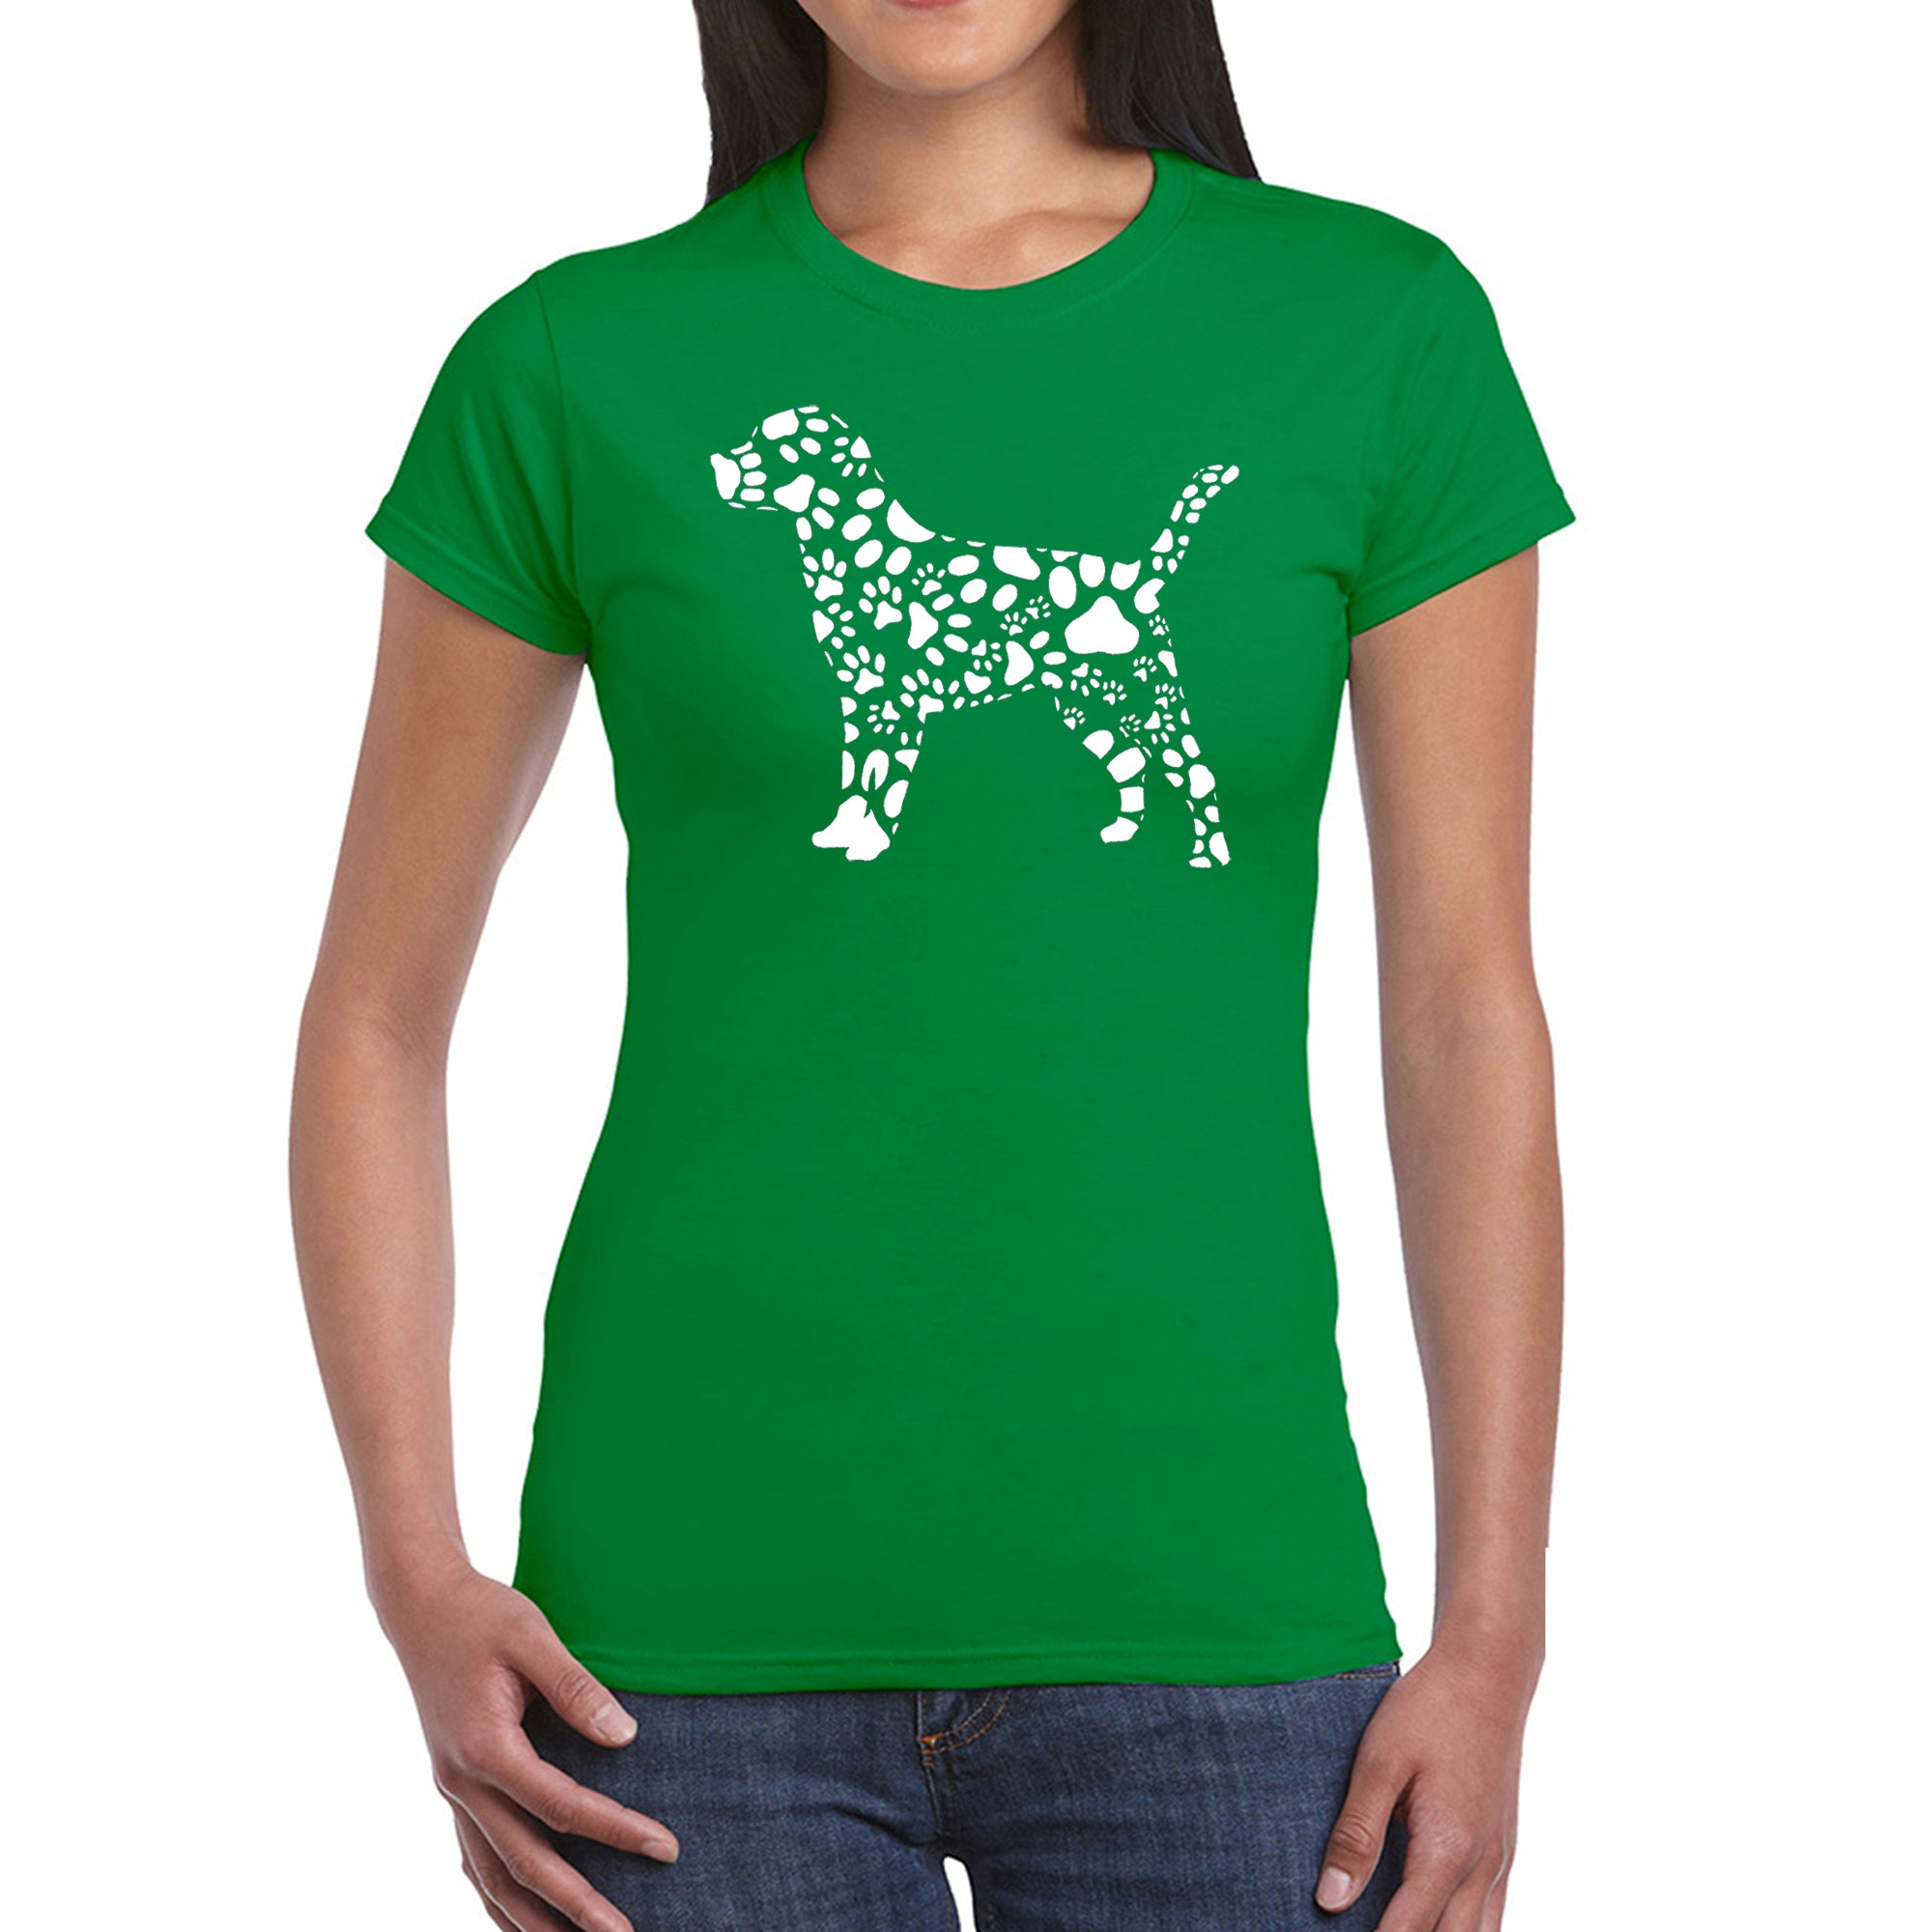 Dog Paw Prints - Women's Word Art T-Shirt - Kelly - Medium